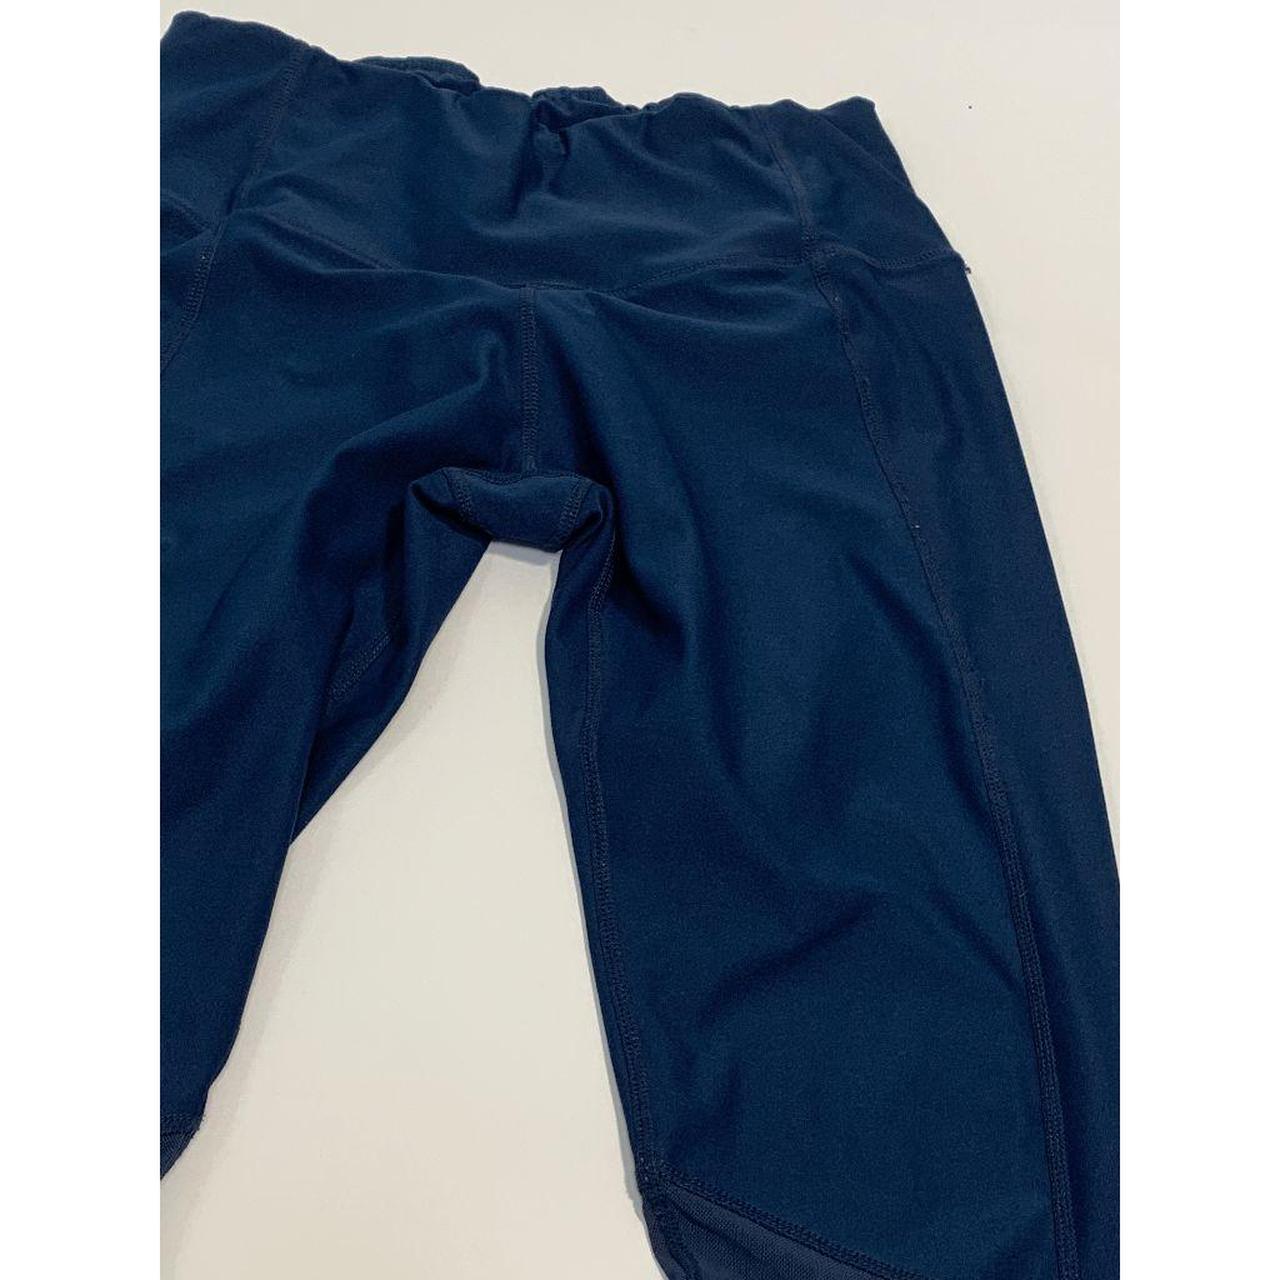 Apana Women's Jegging Pants Elastic Waist Blue Mesh